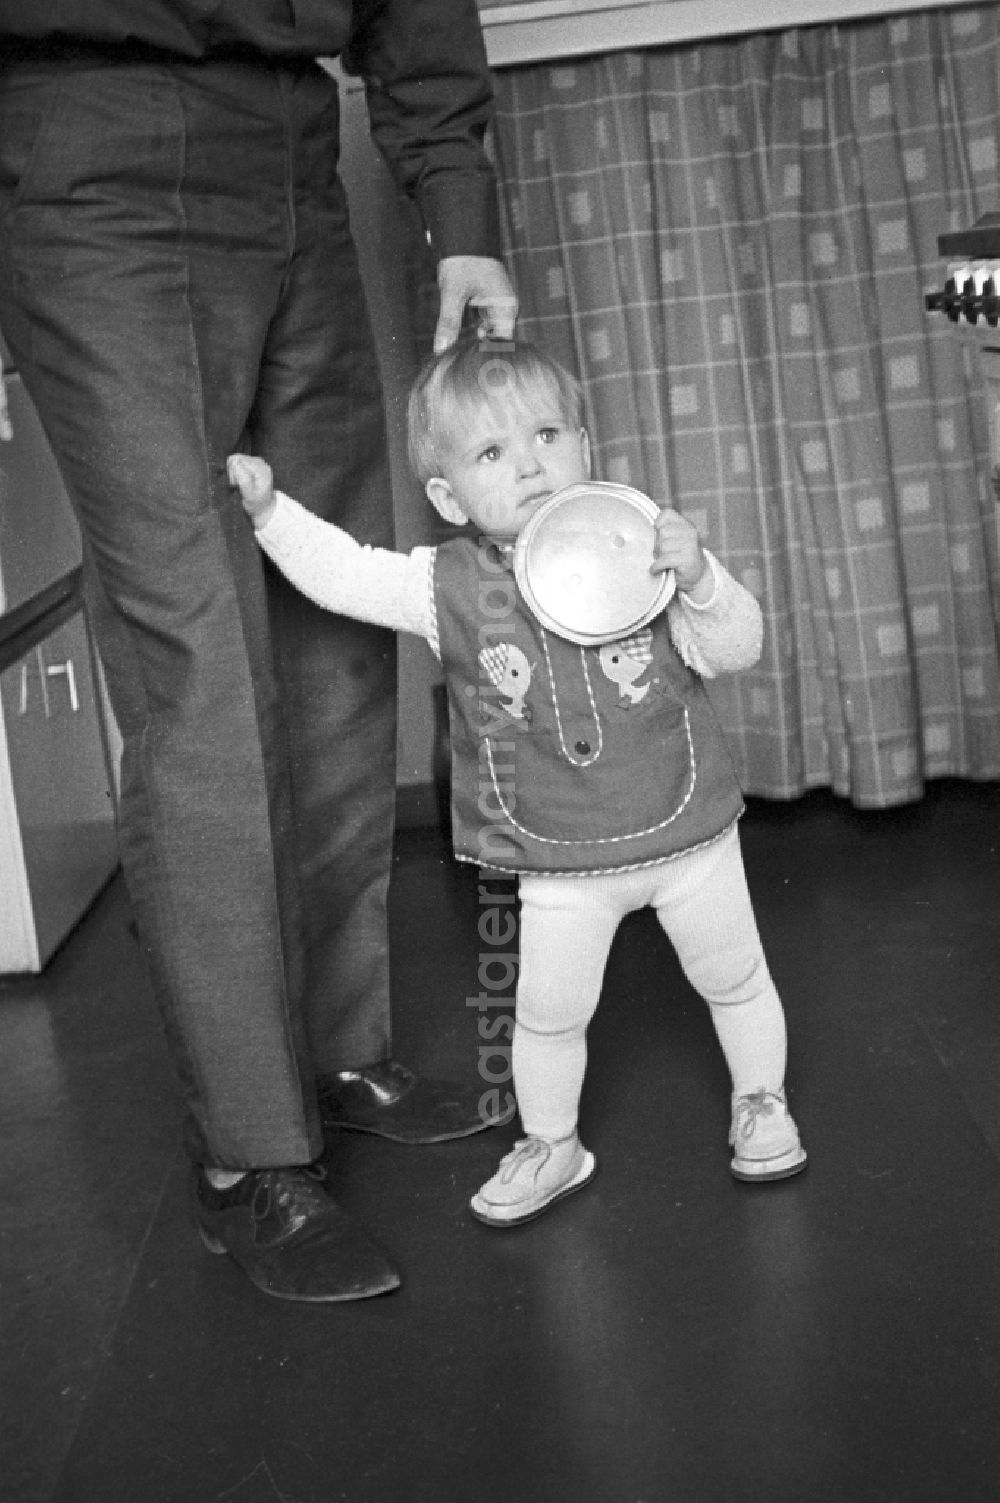 Berlin - Friedrichshain: First running tests of a toddler with the help of Papa in Berlin - Friedrichshain